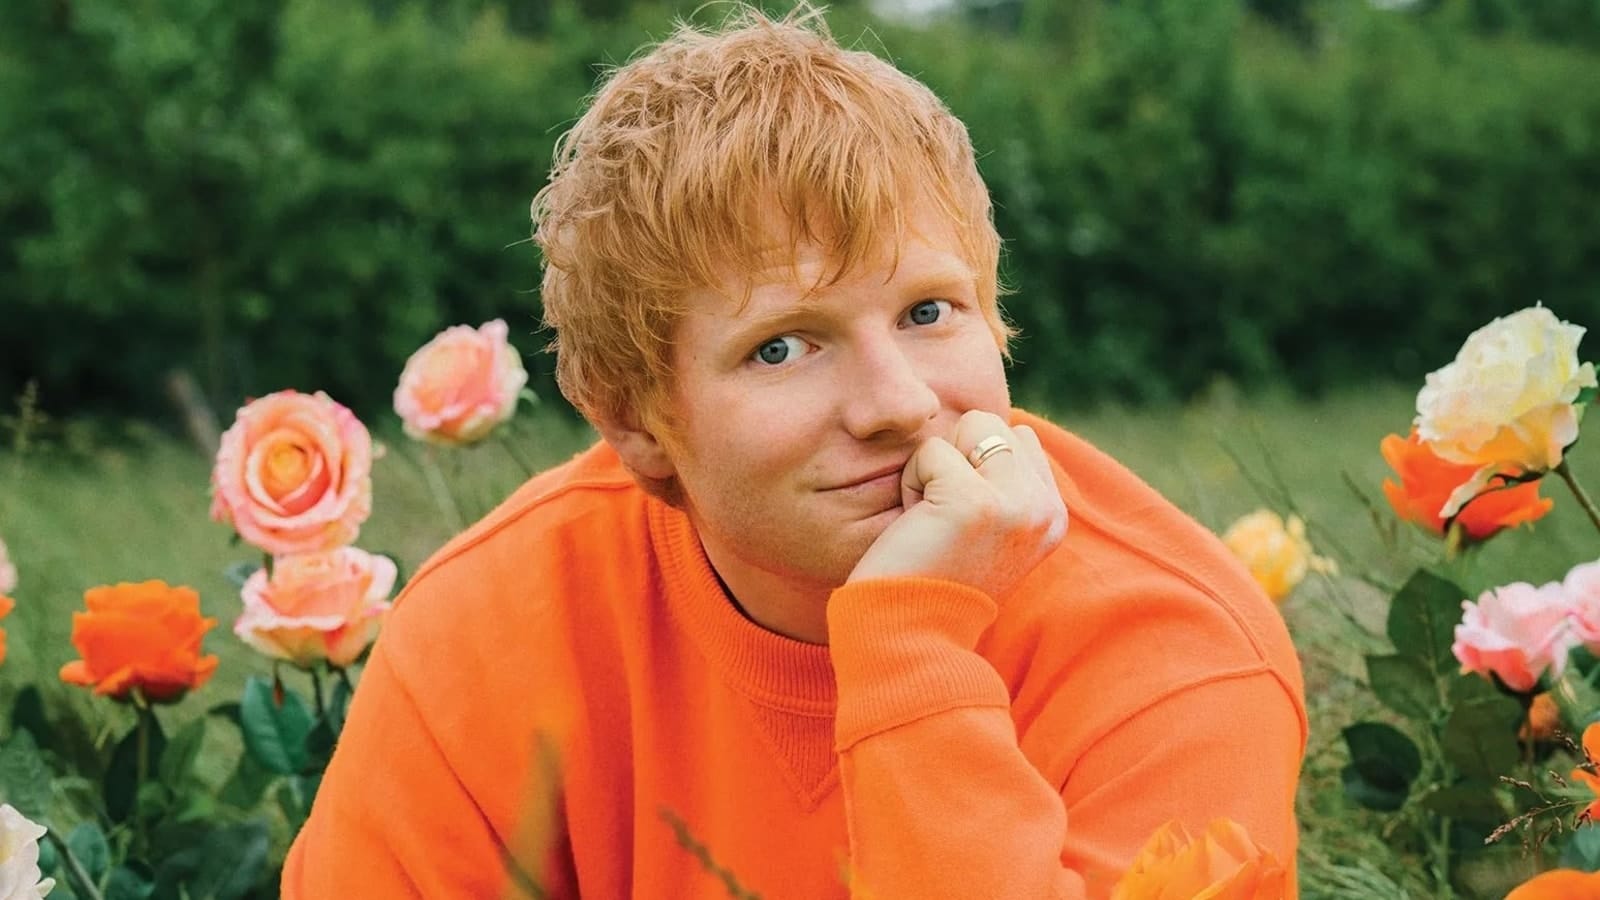 Ed Sheeran reveals why he dug his grave in home’s backyard